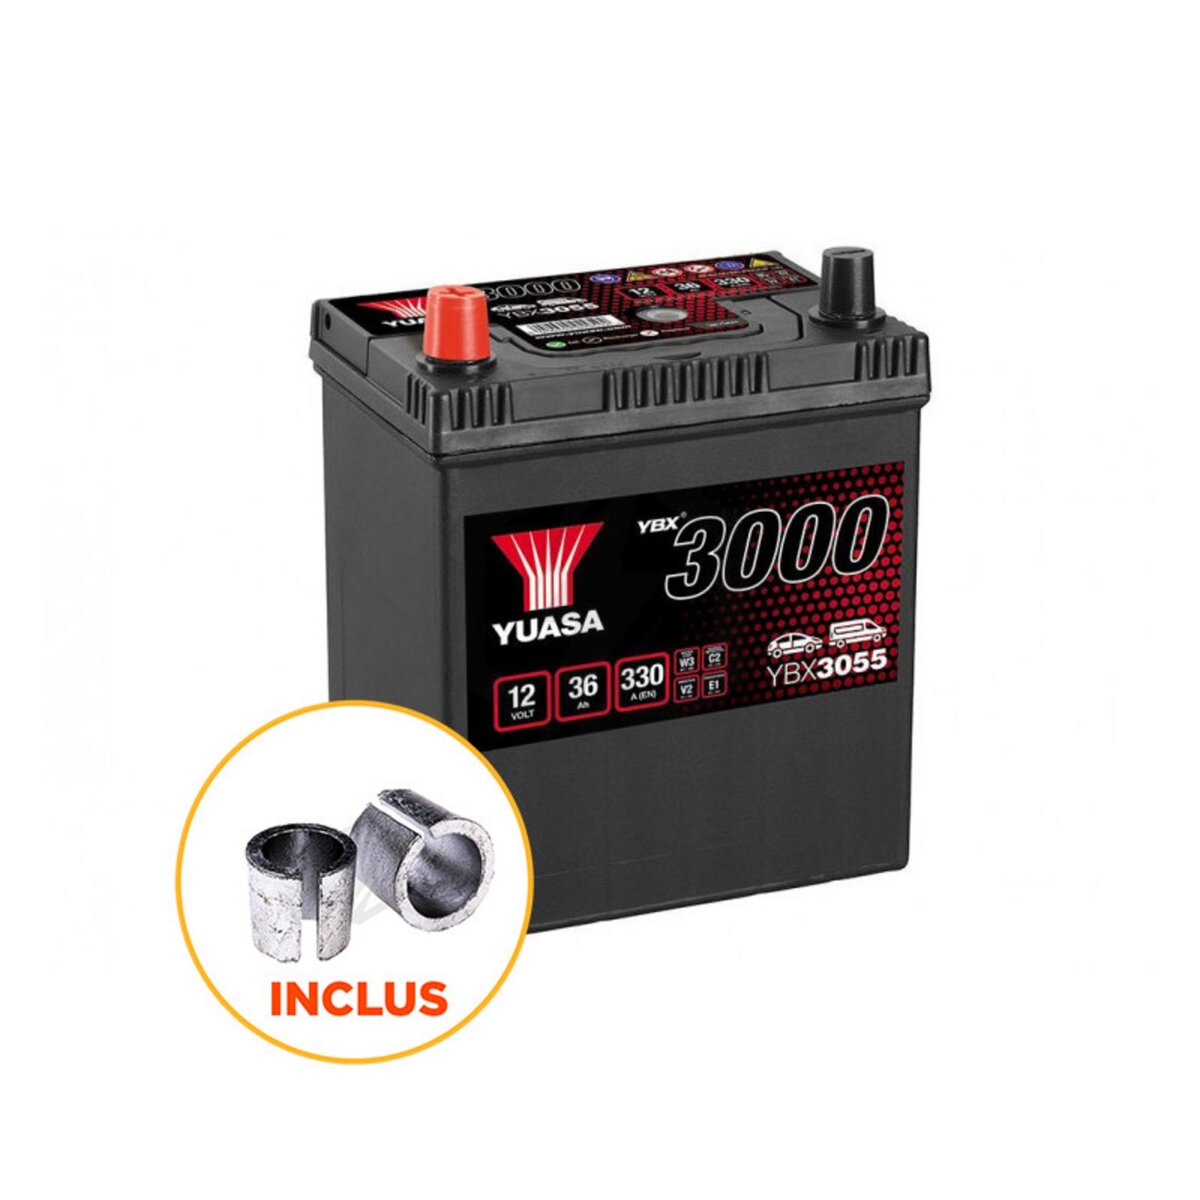 YUASA Batterie Yuasa SMF YBX3055 12V 36ah 330A